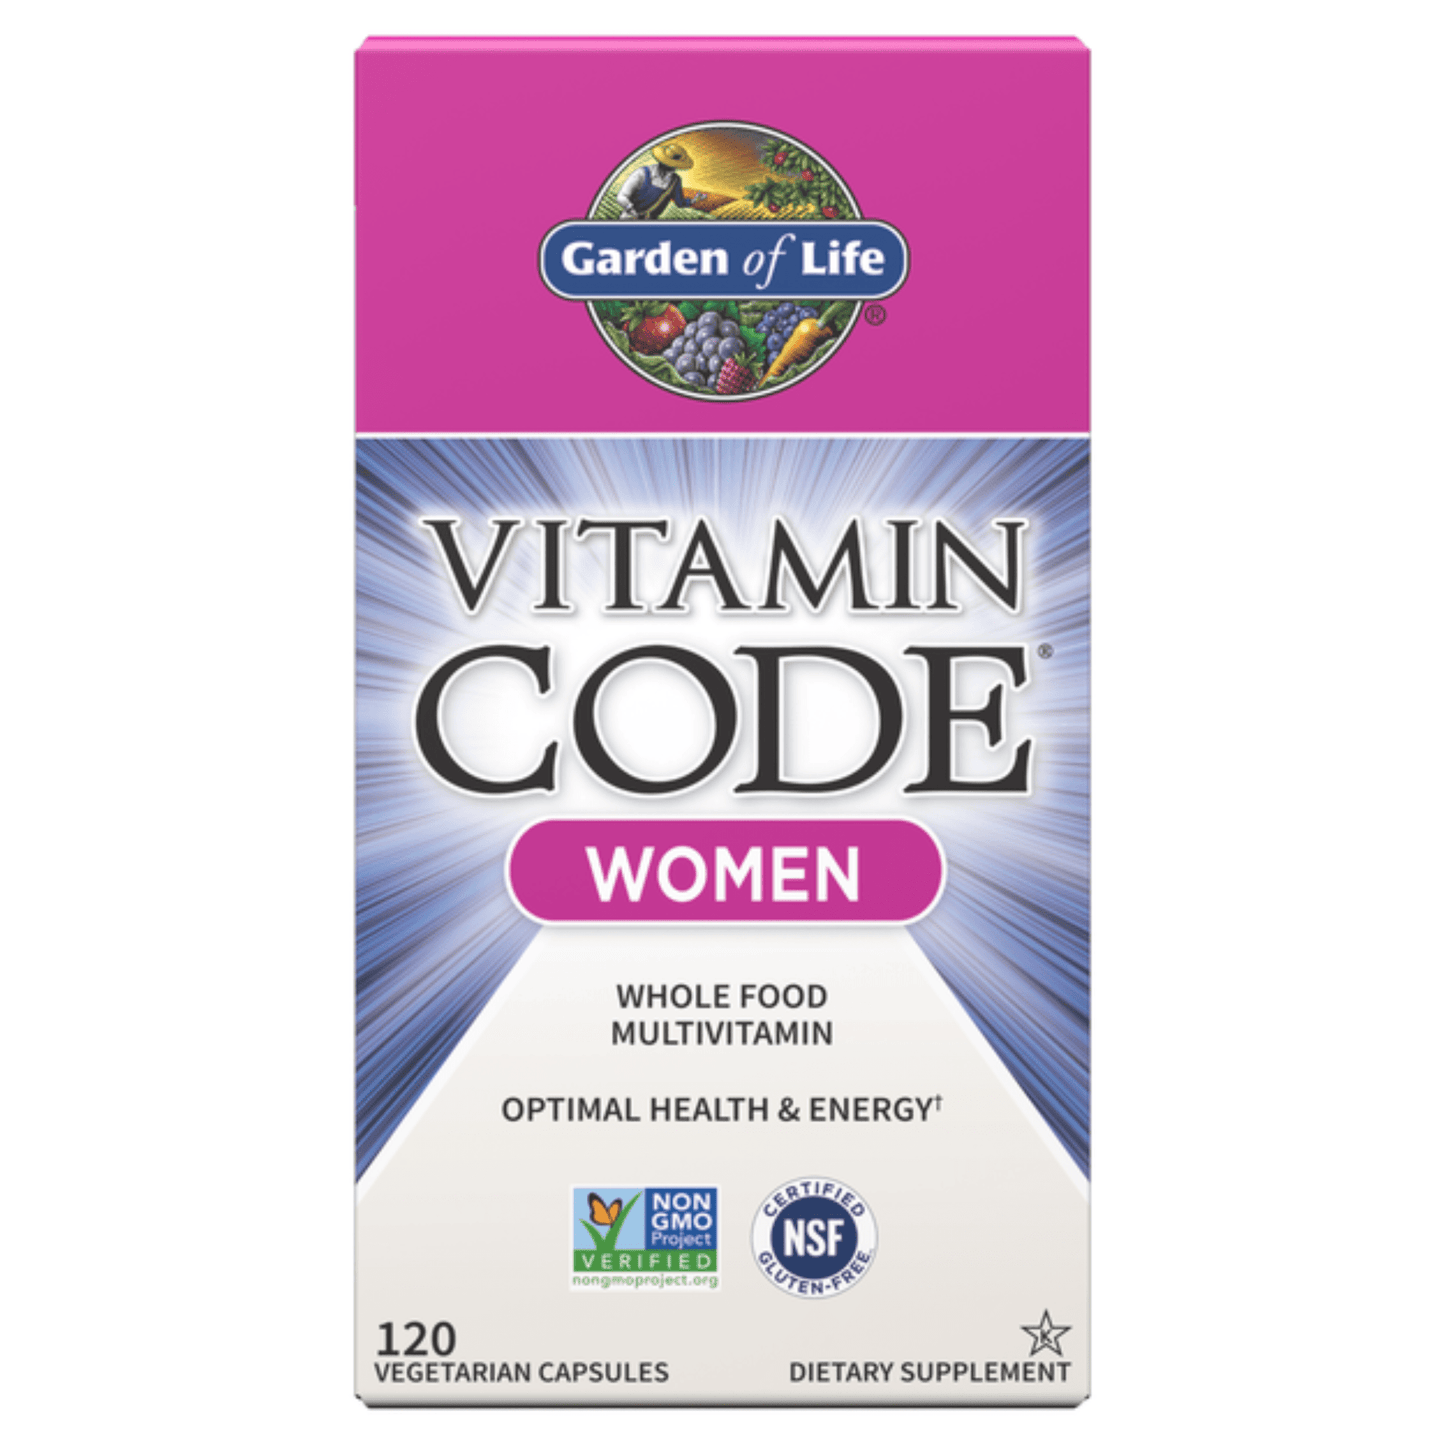 Primary Image of Vitamin Code Women